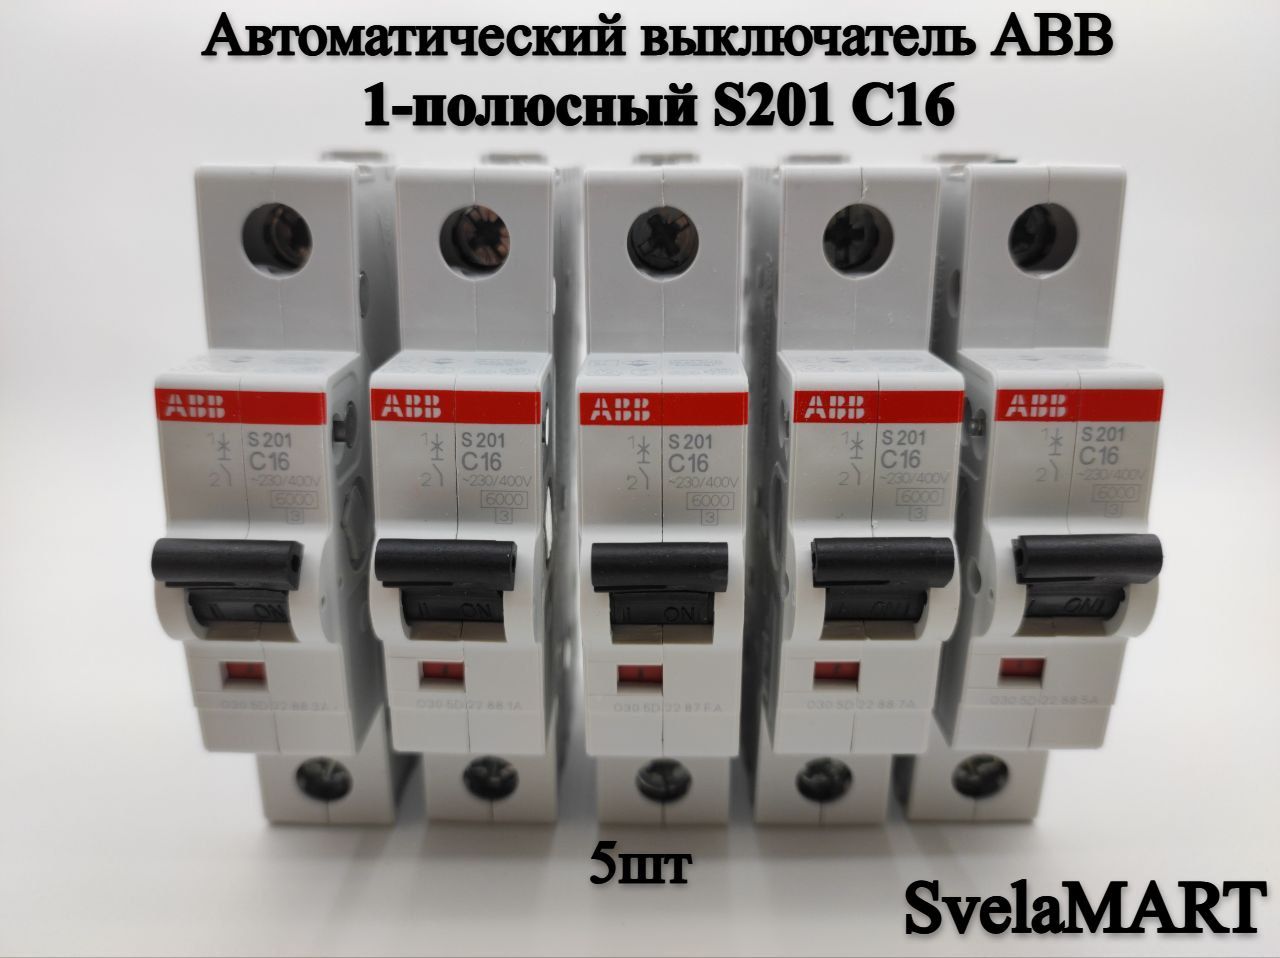 ABB s201 c16. ABB s201 (c) 6ka 16 а.. Импульсное реле АББ на 16 ампер. Дифференциальный автомат ABB ds201.